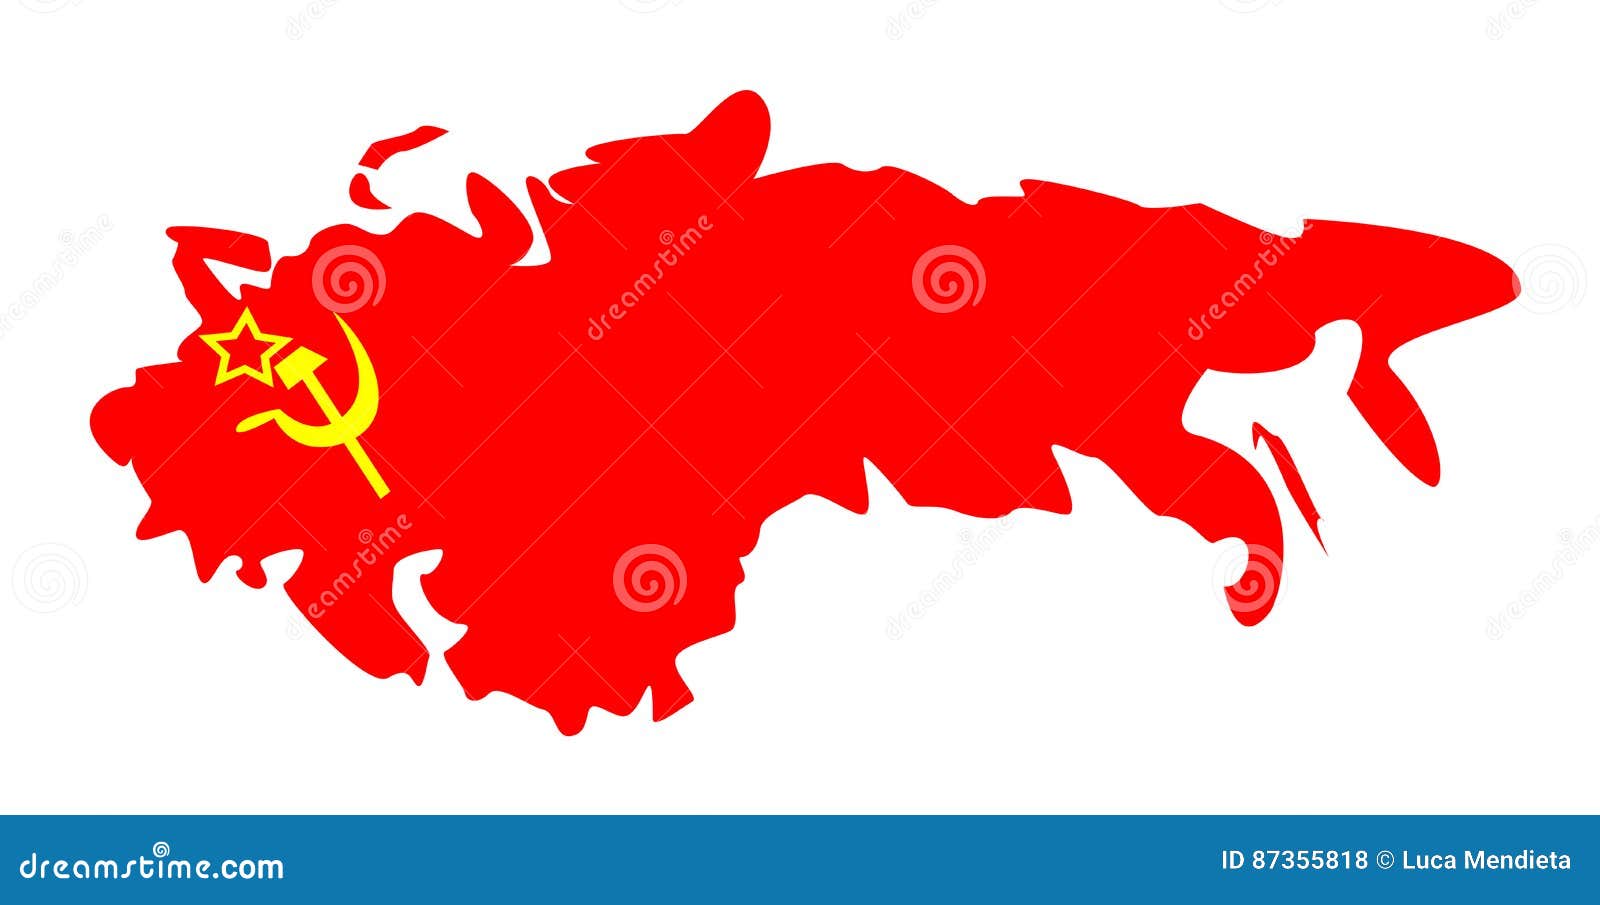 Union of Soviet Socialists Republics Stock Illustration - Illustration ...